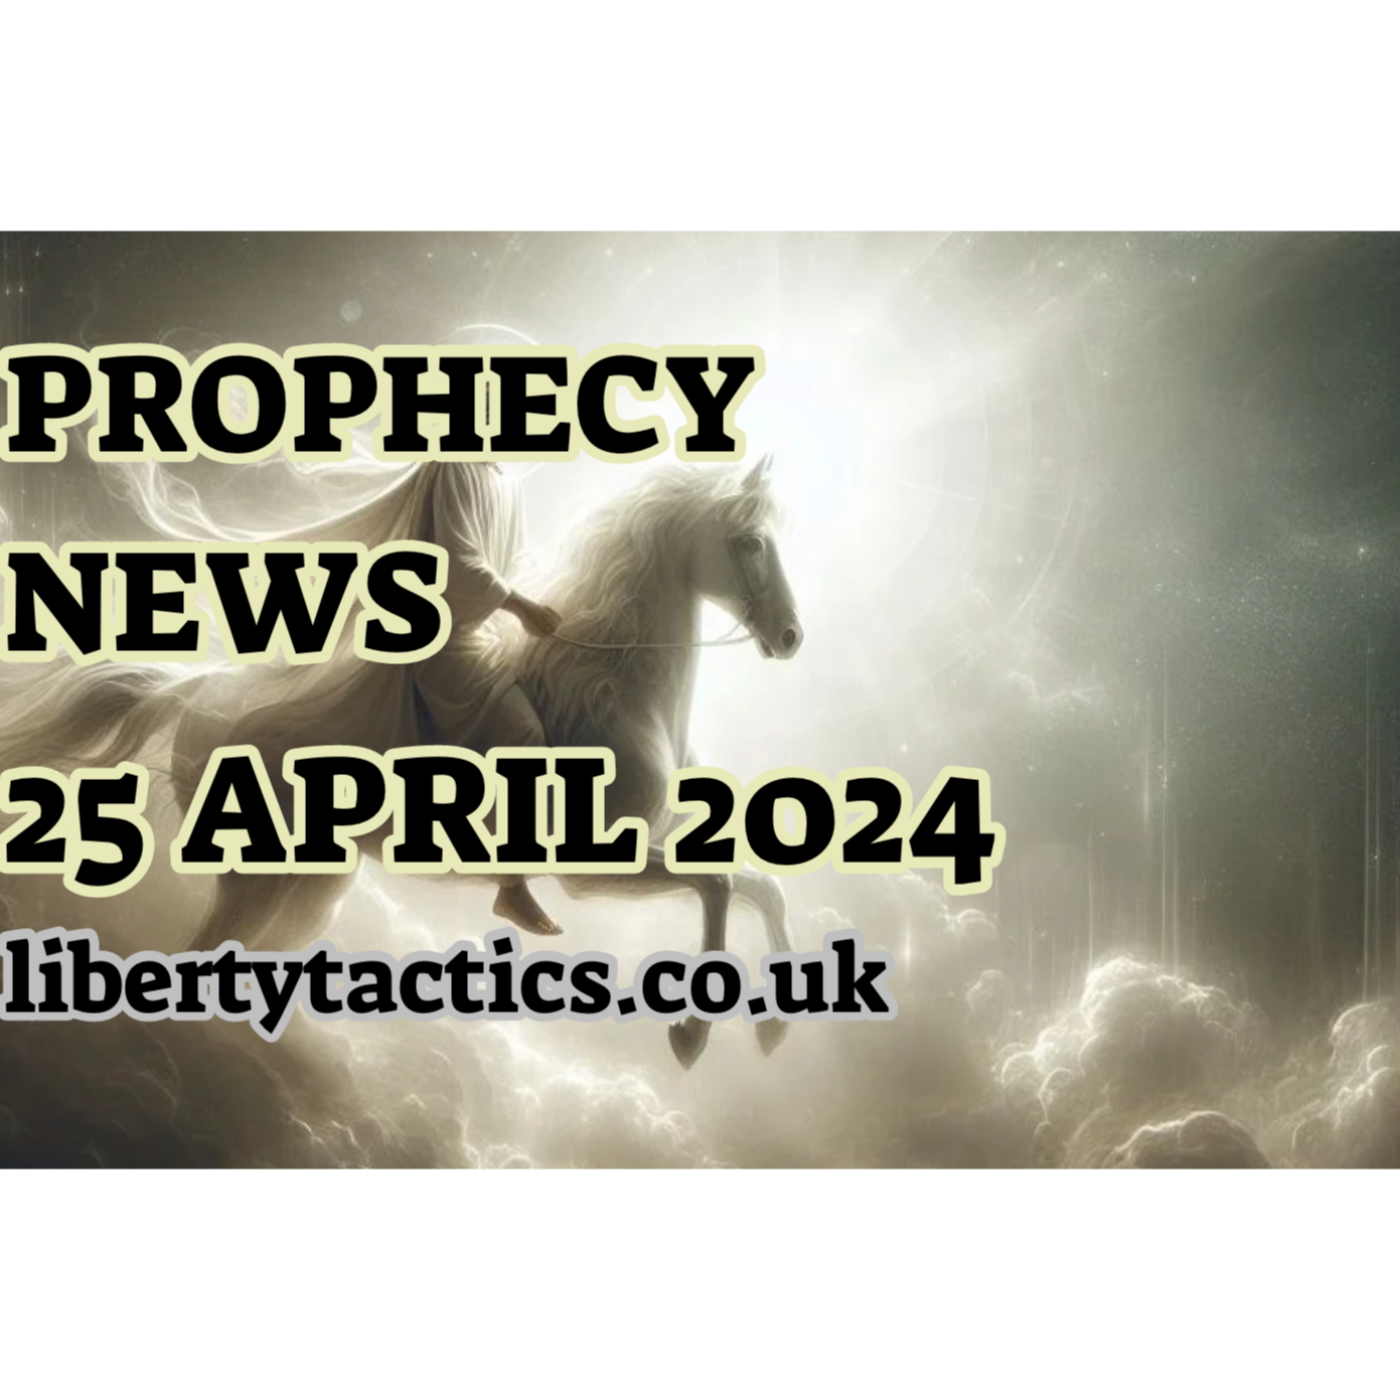 Prophecy News - 25.4.24 - WHITE HORSE, BIG BEN, ROYALS, DEAD OR ALIVE - REVIVAL